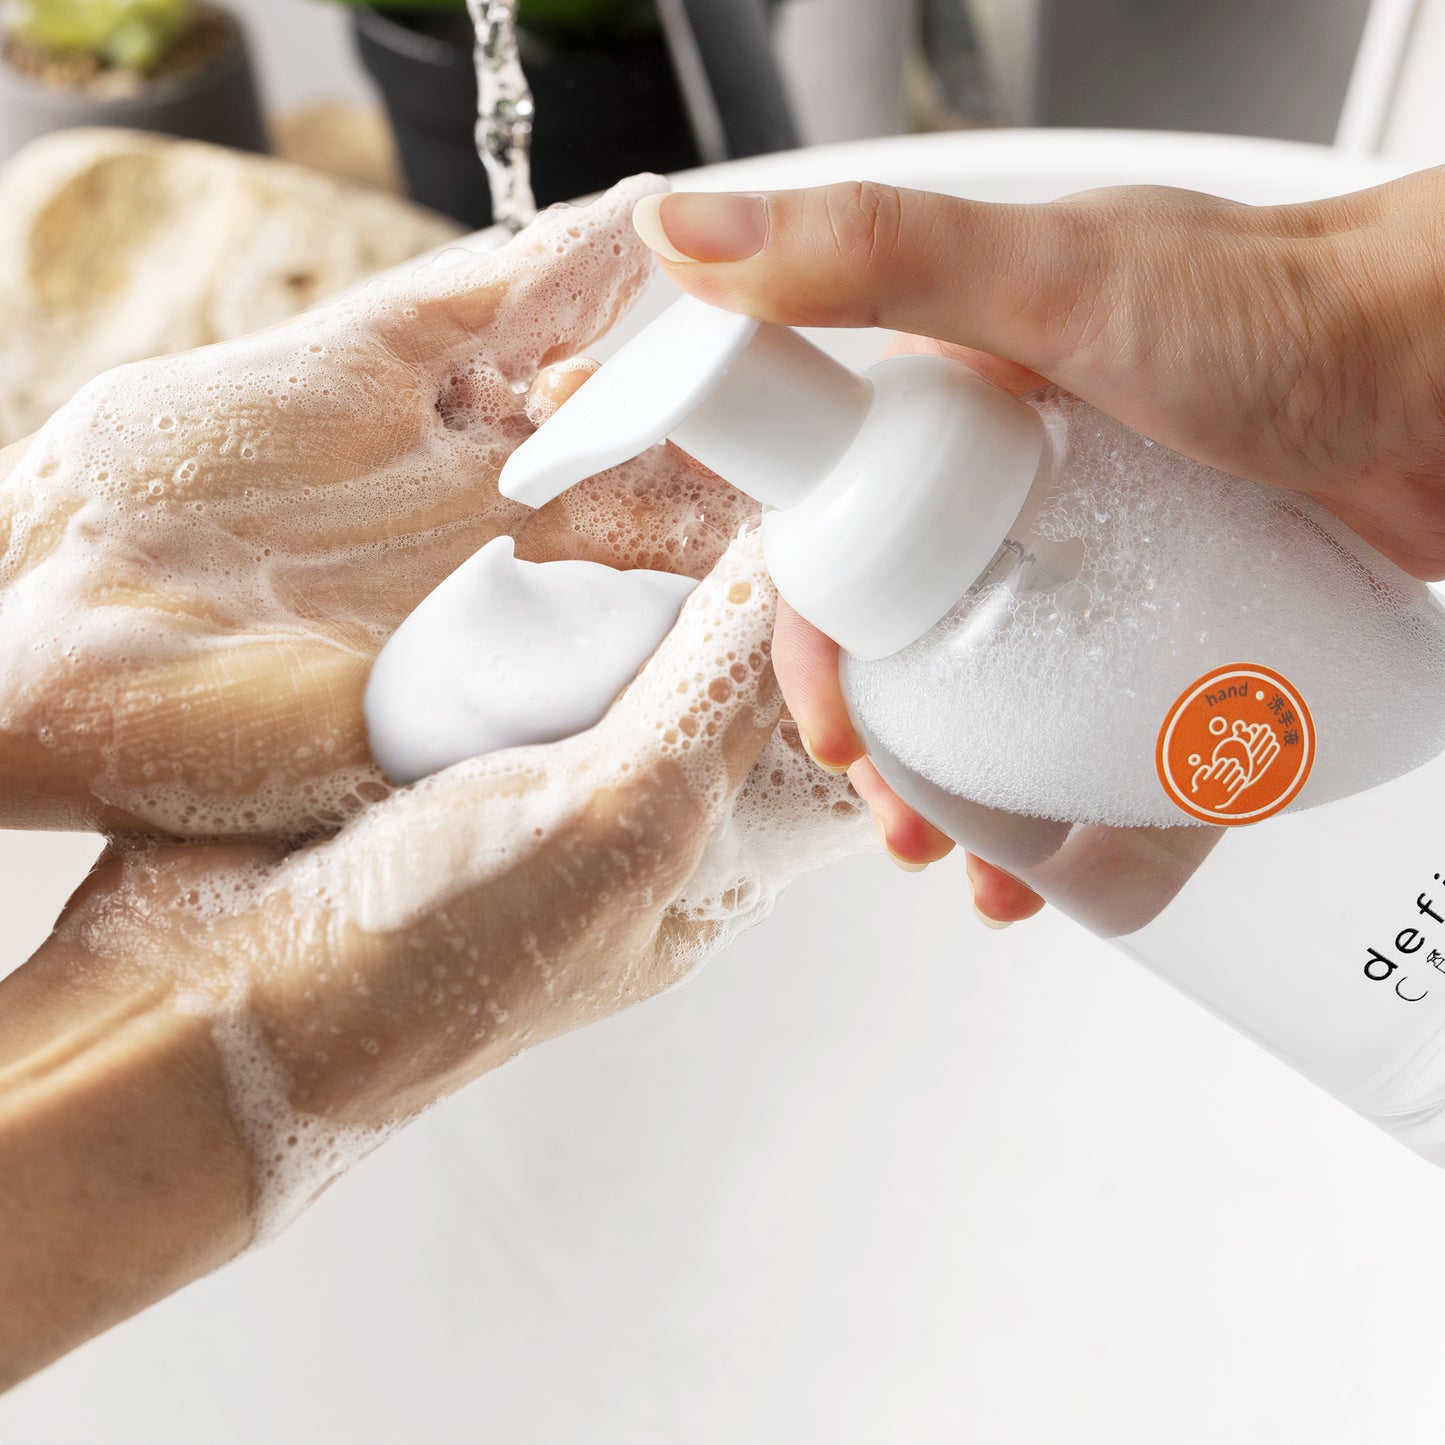 define CLEAN Foaming Hand Soap Refill Powder 7g